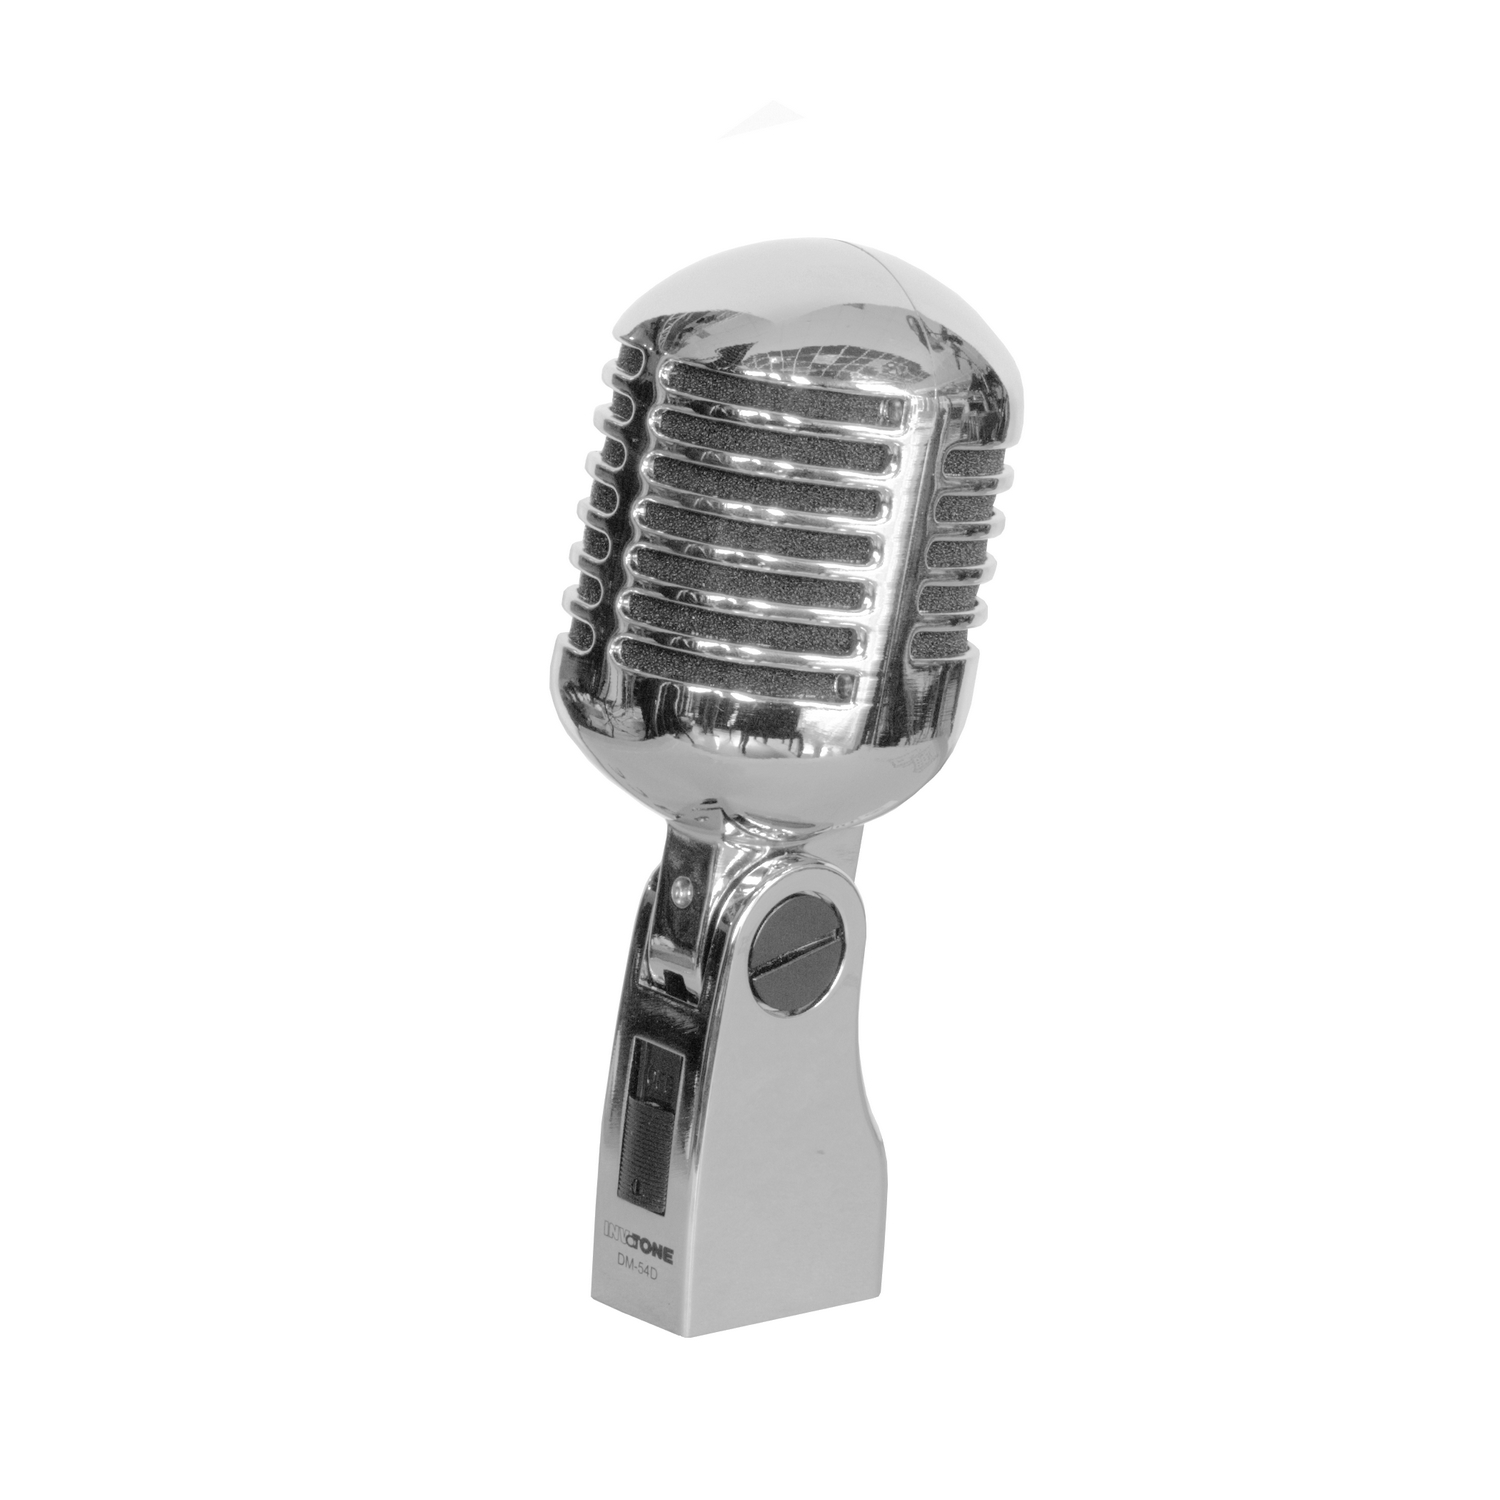 INVOTONE DM-54D - динамический микрофон, кардиоида, 60 Гц - 16 кГц